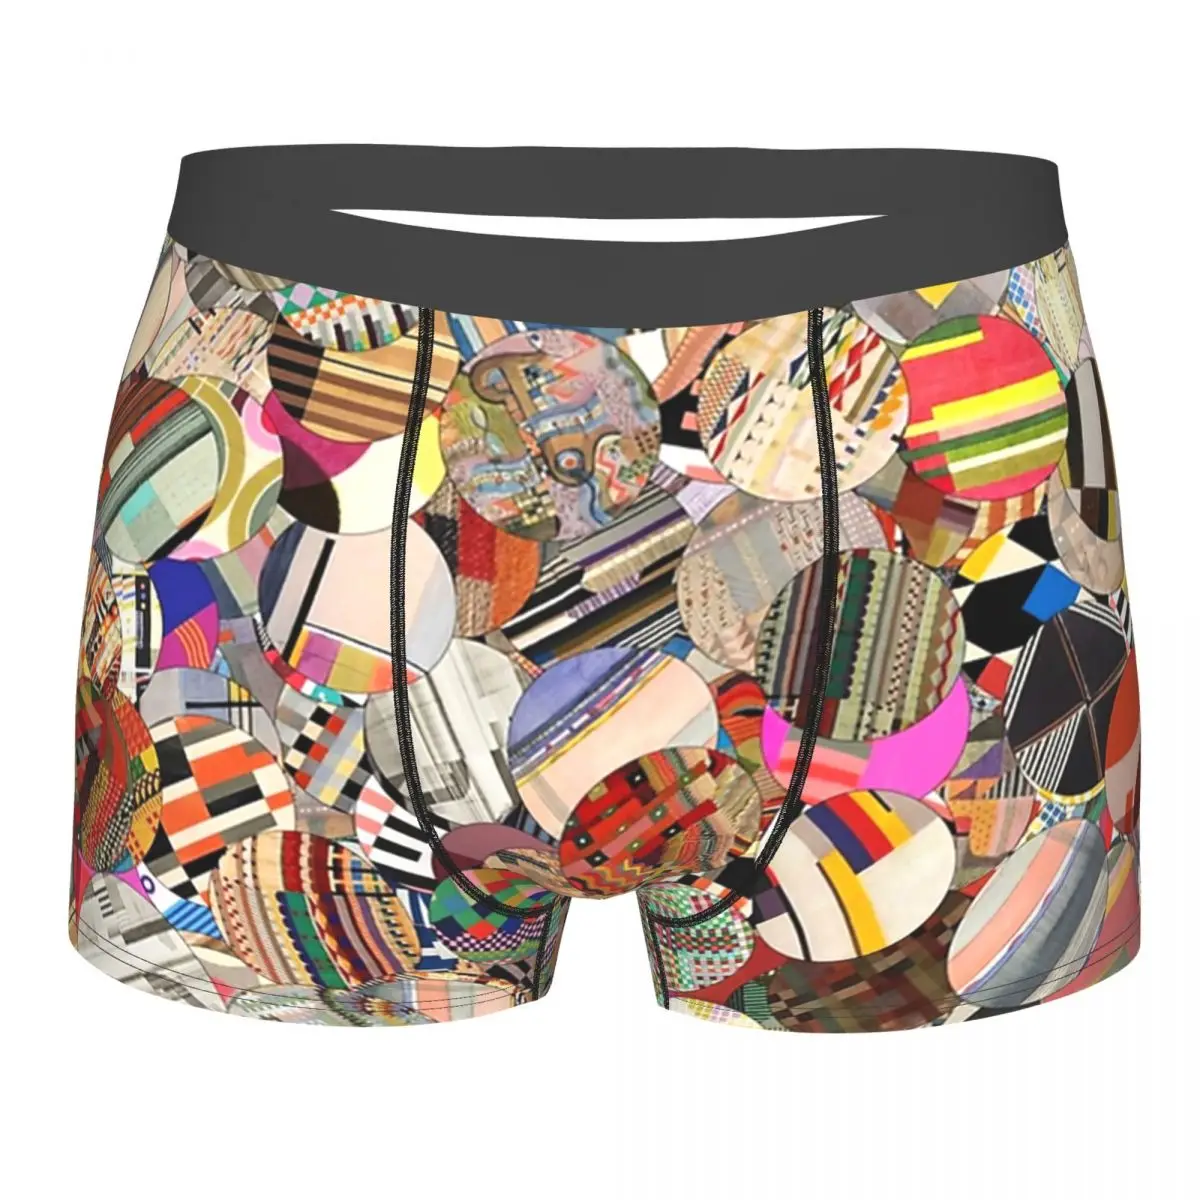 Bauhaus Underpants Breathbale Panties Male Underwear Print Shorts Boxer Briefs bauhaus